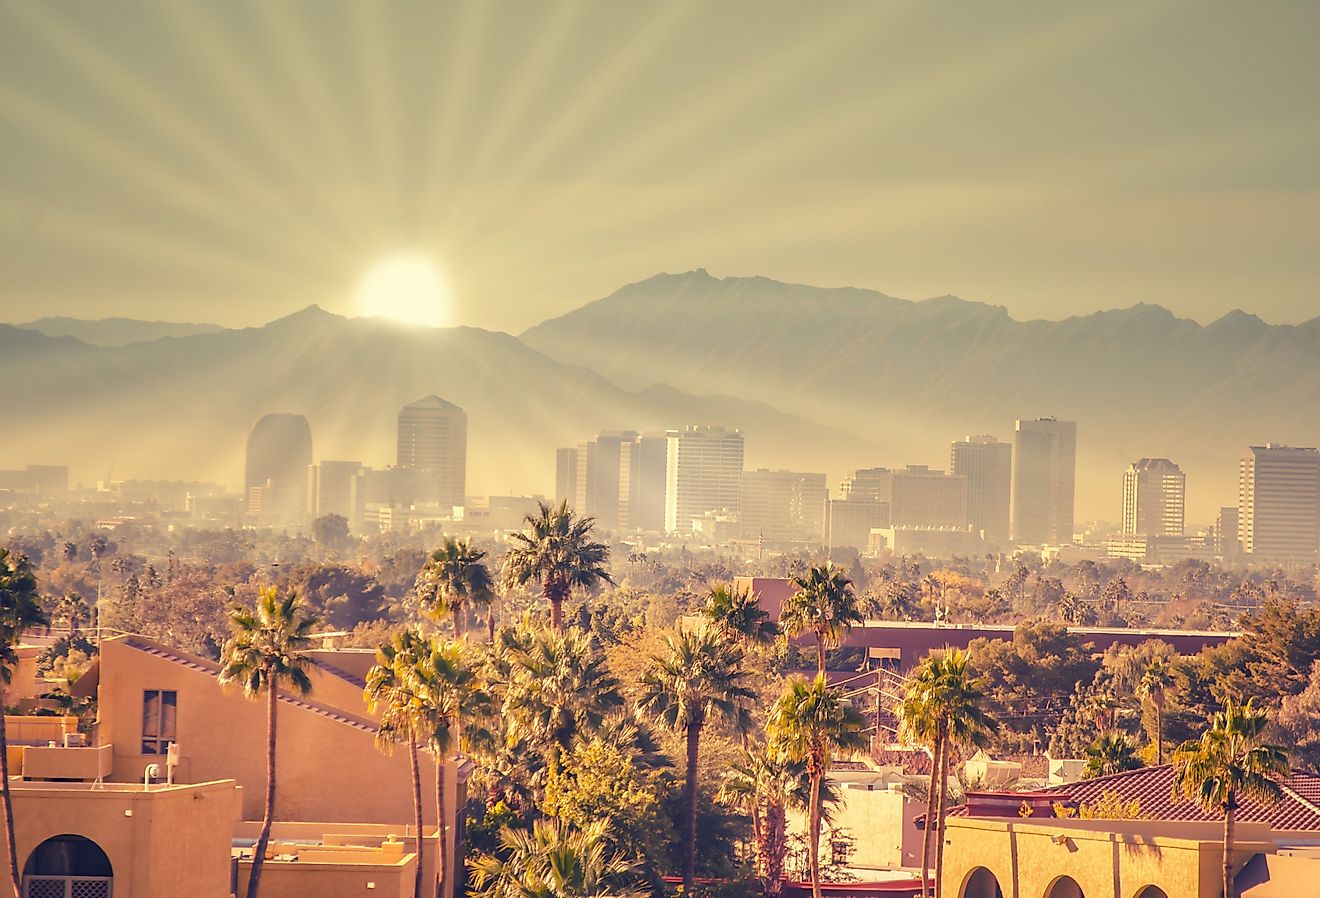 Morning sunrise over Phoenix, Arizona, USA, Image credit BCFC via Shutterstock.